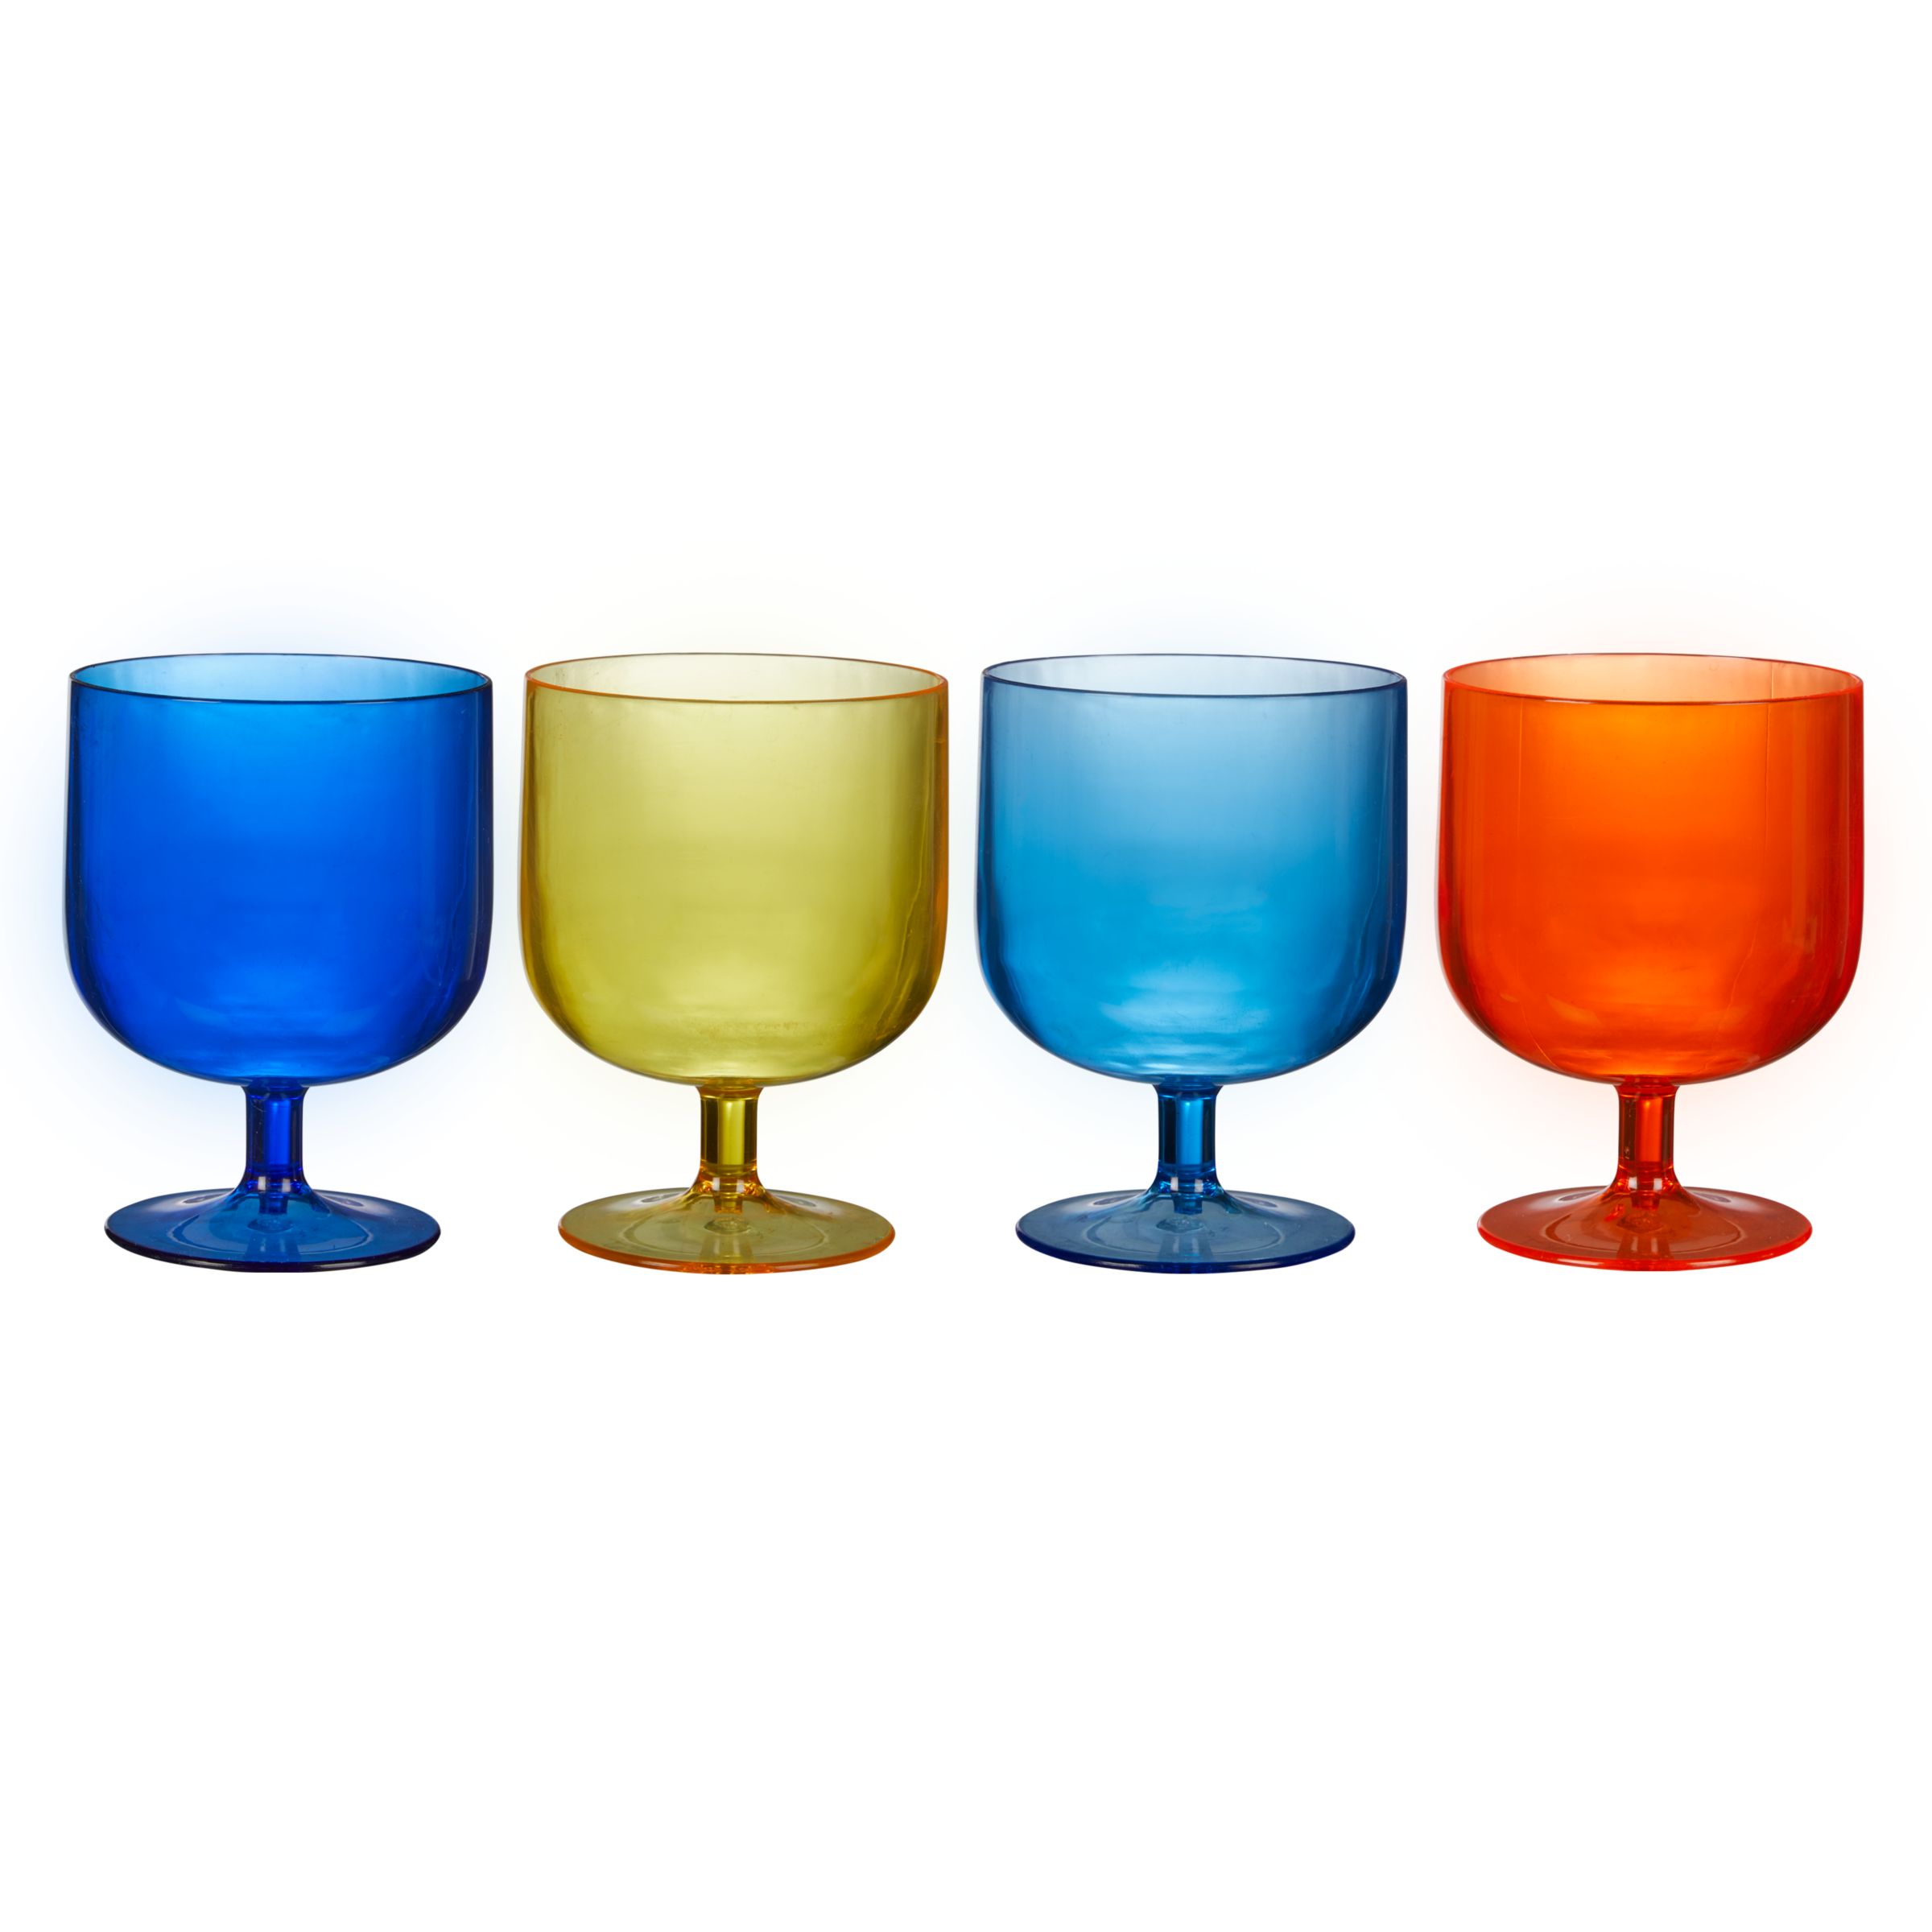 John Lewis & Partners Poolside Picnic Stacking Plastic Wine Glasses, 175ml, Assorted, Set of 4